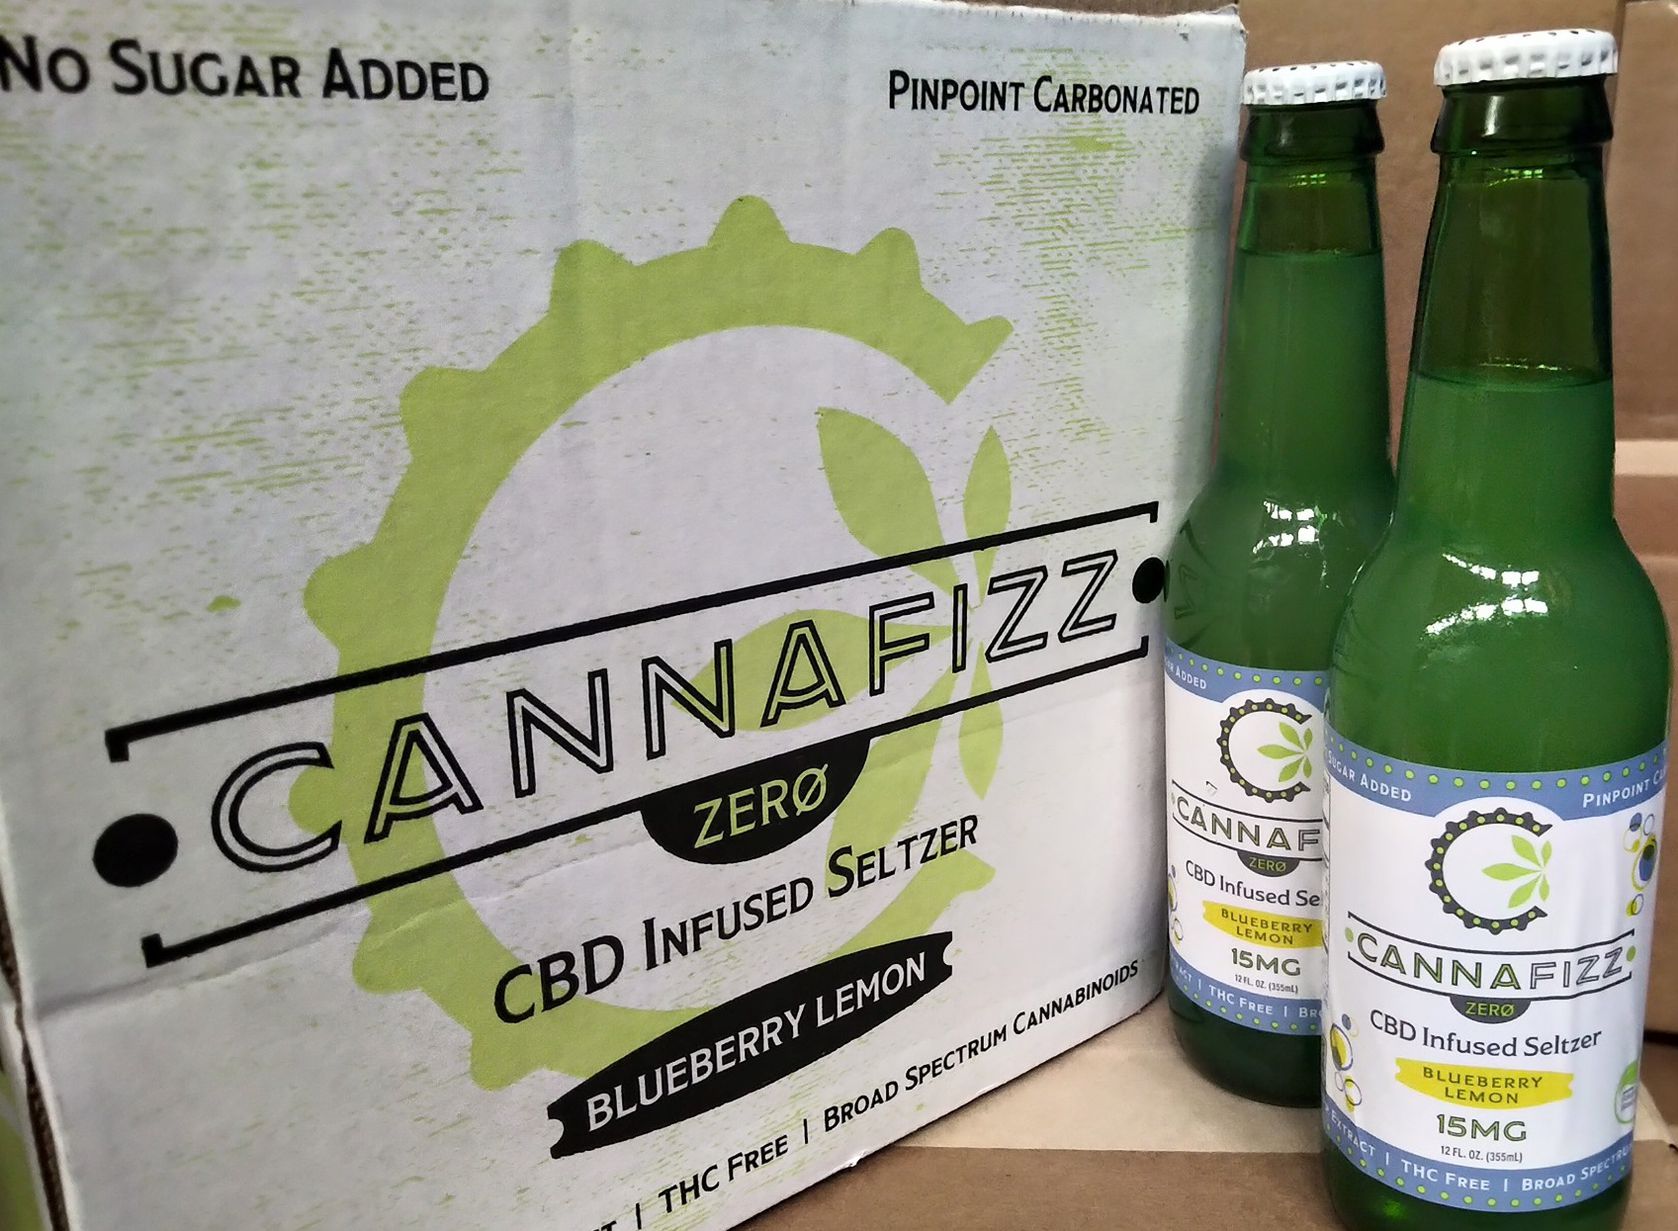 2 Green Glass Bottles of Cannafizz seltzer water next to case box